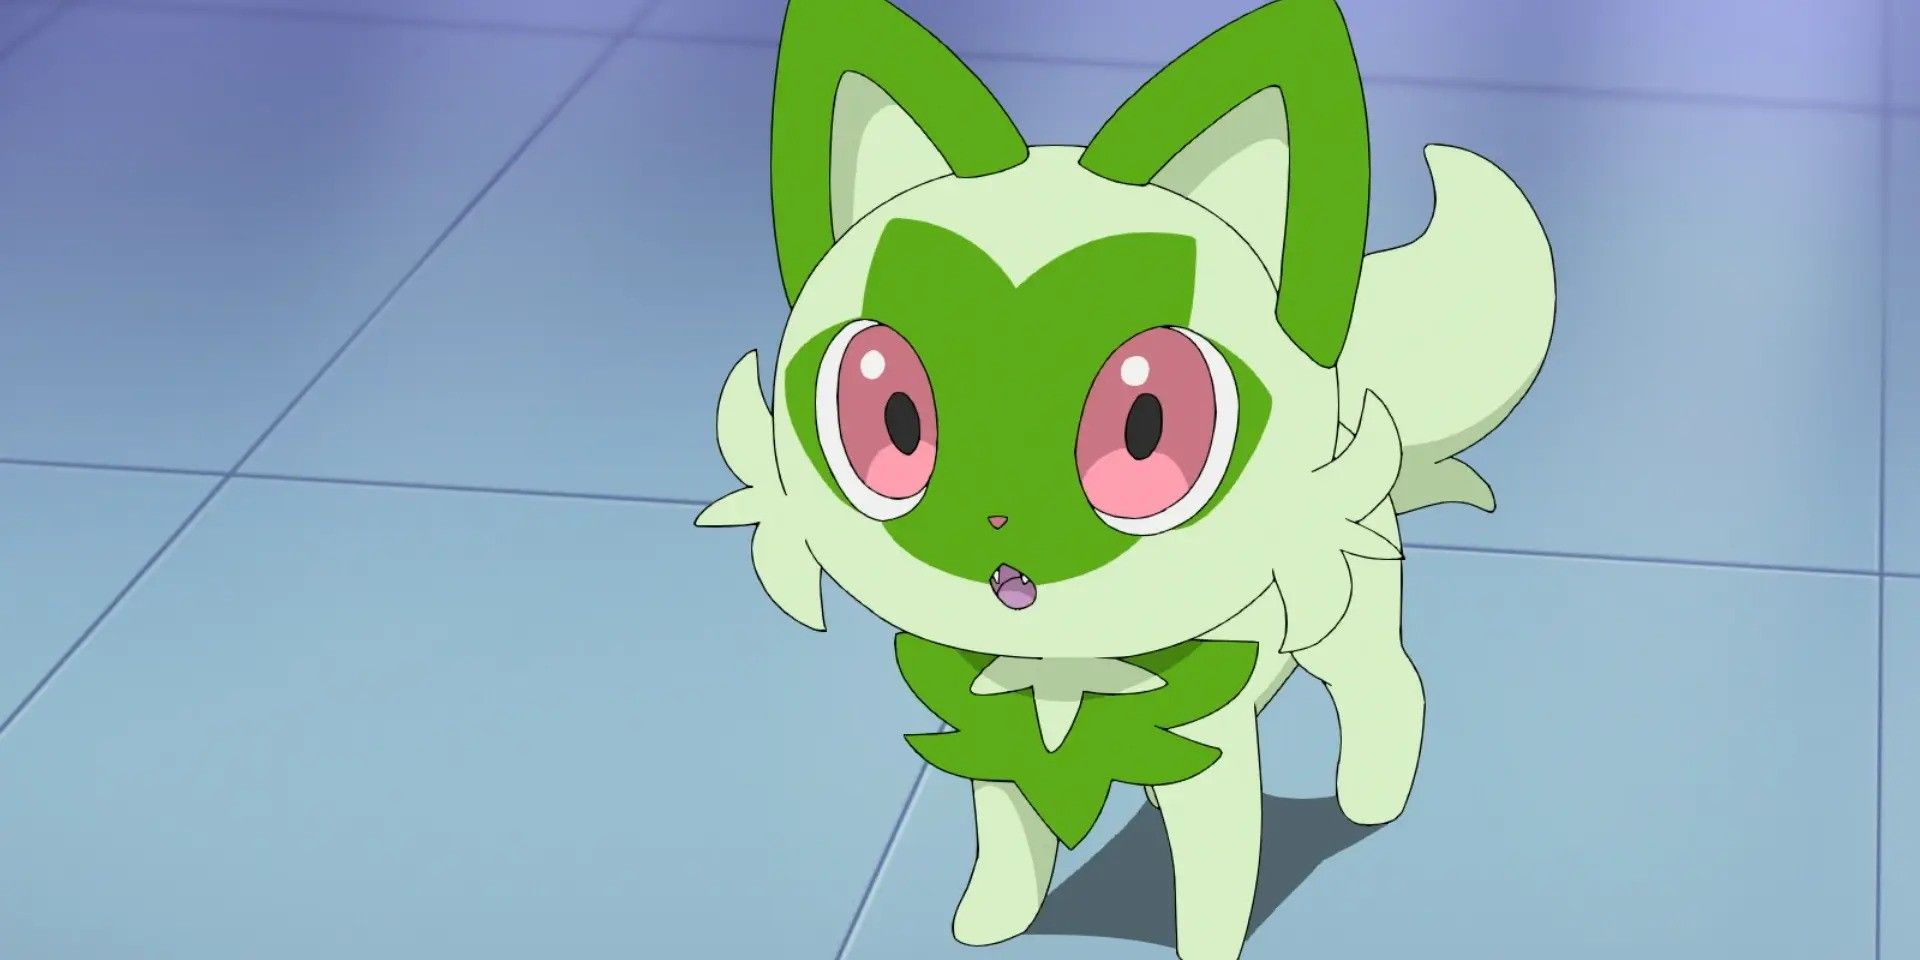 A still from the Pokémon anime featuring Sprigatito, the Grass Cat Pokémon